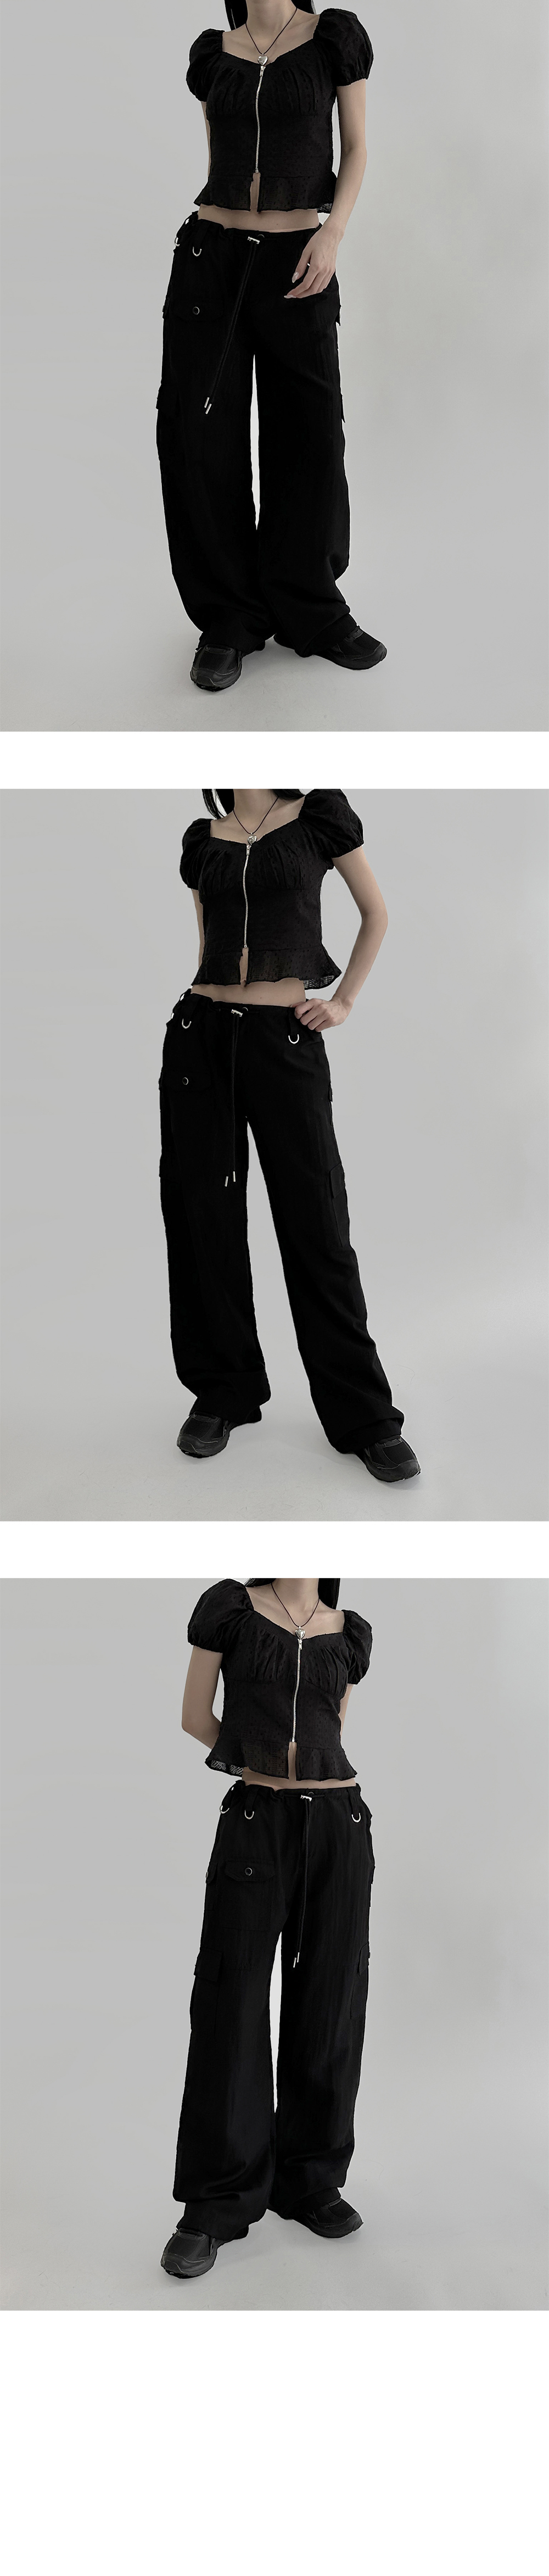 suspenders skirt/pants charcoal color image-S1L15